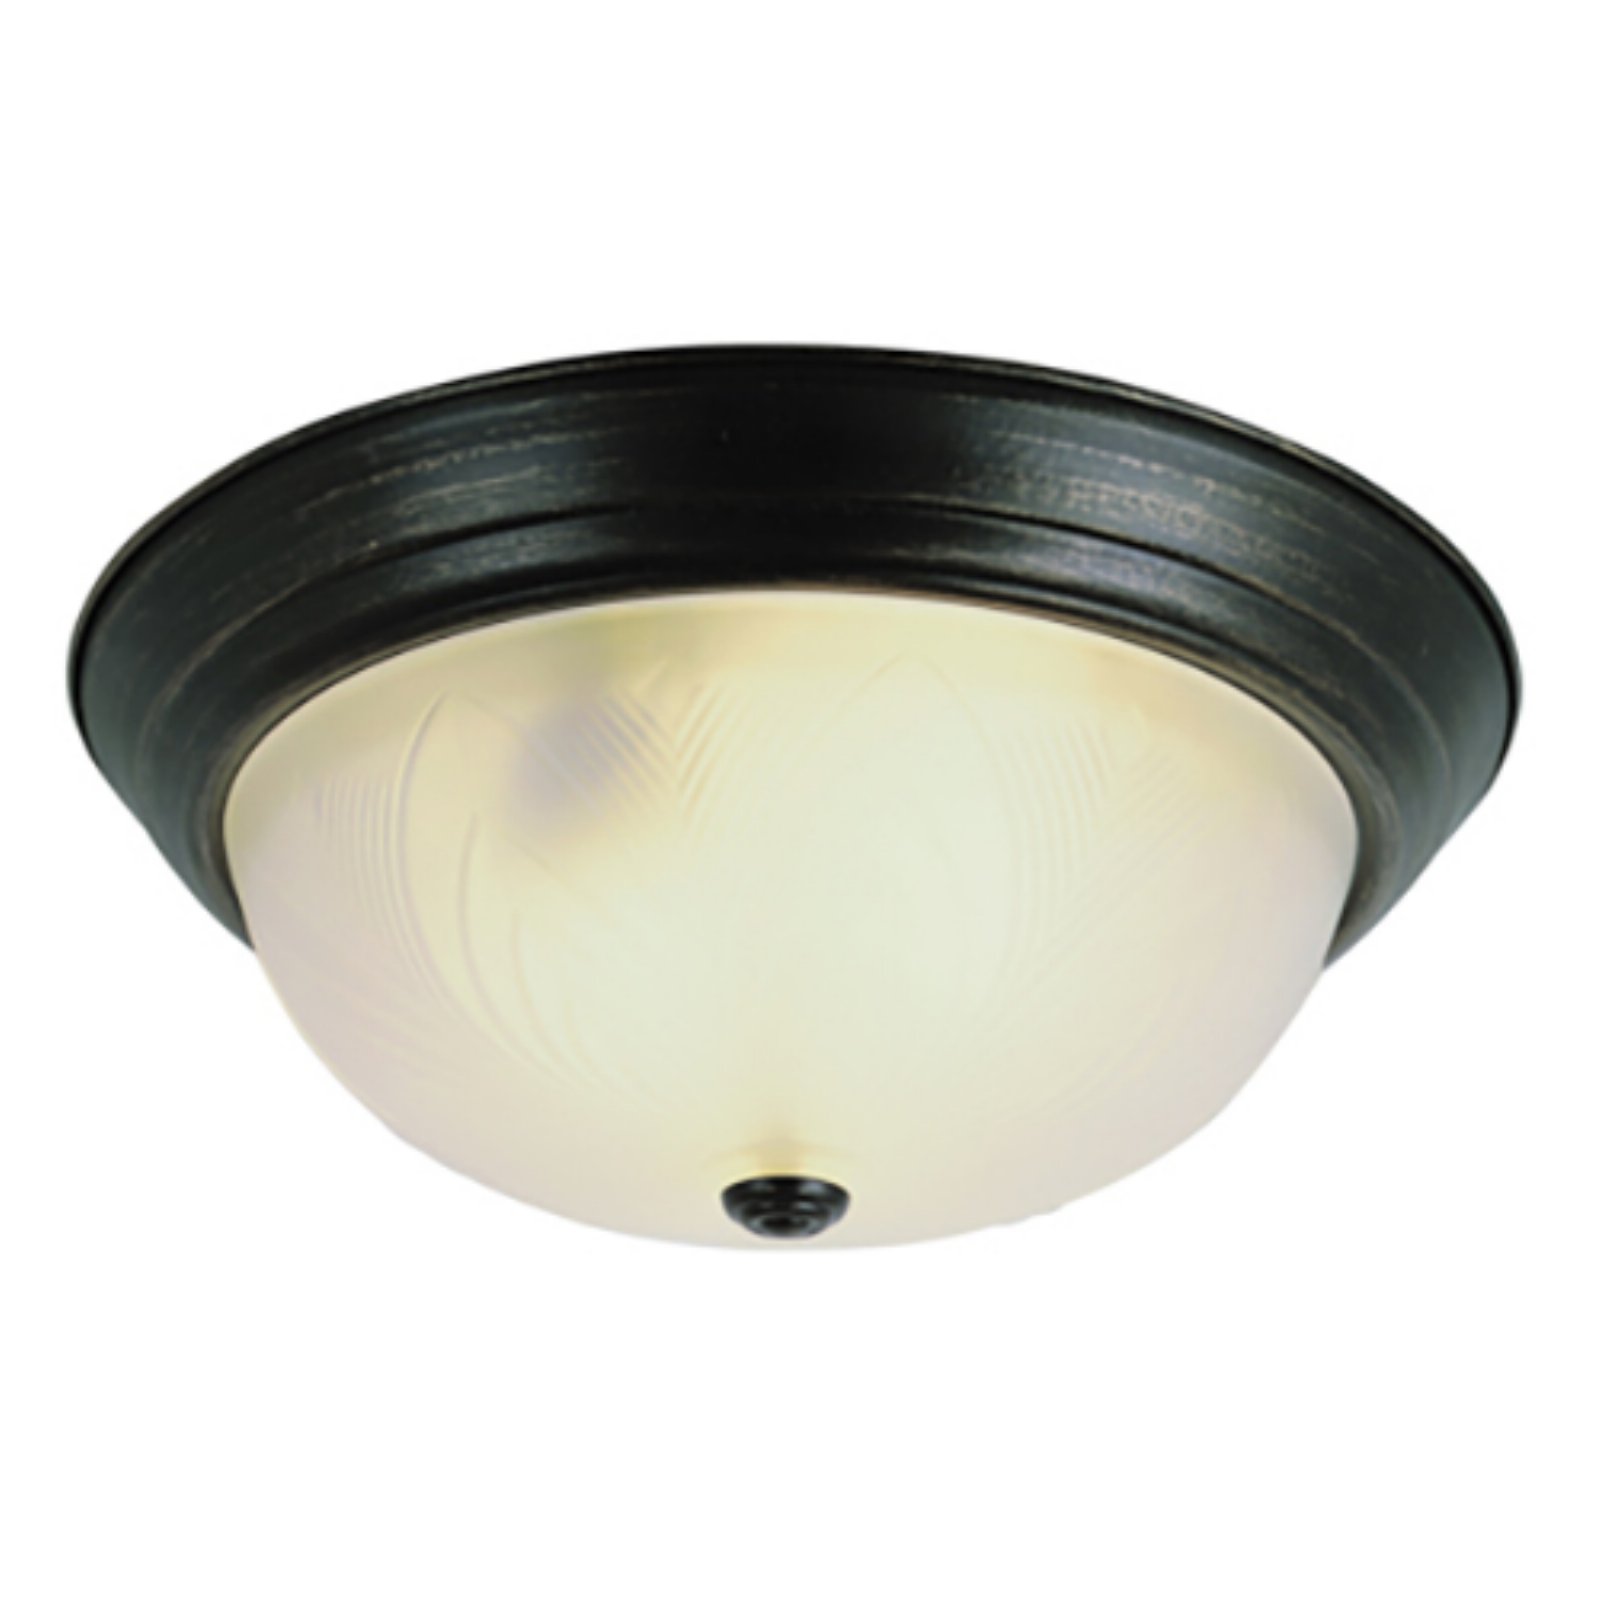 58802 ROB-Trans Globe Lighting-Back To Basics - Three Light Flush Mount - image 2 of 2